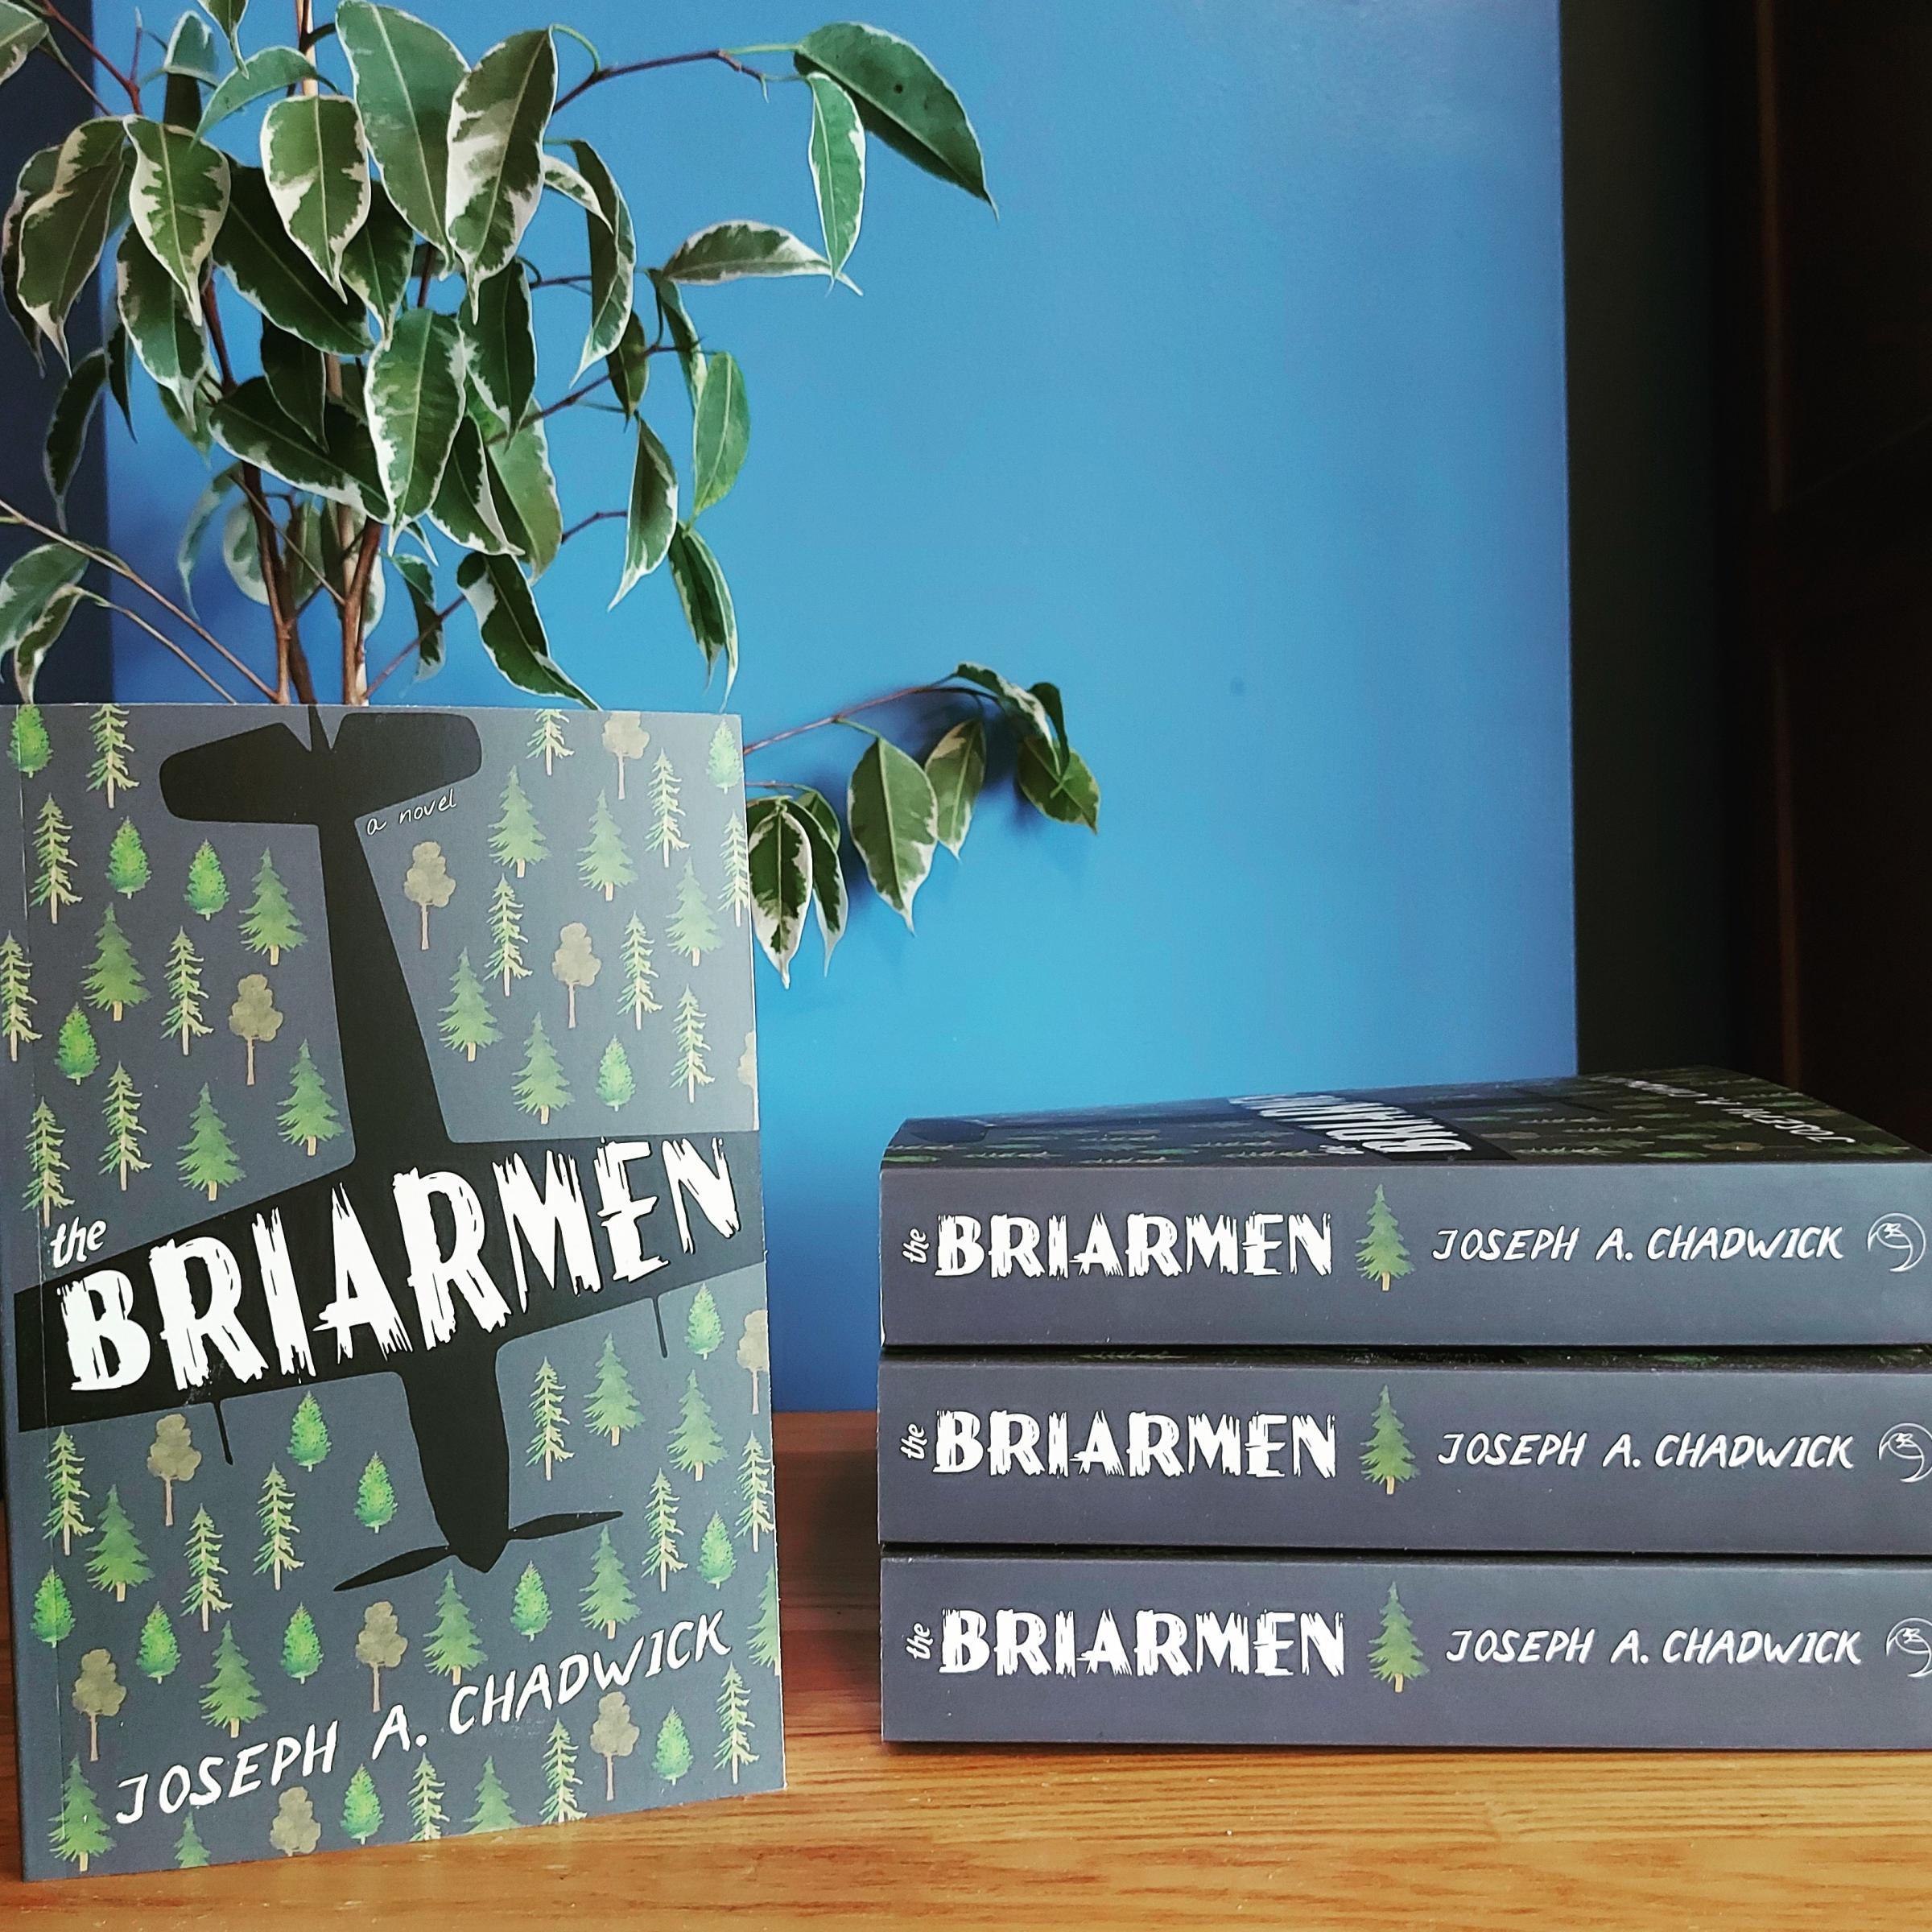 Copies of The Briarmen, by Joseph Chadwick